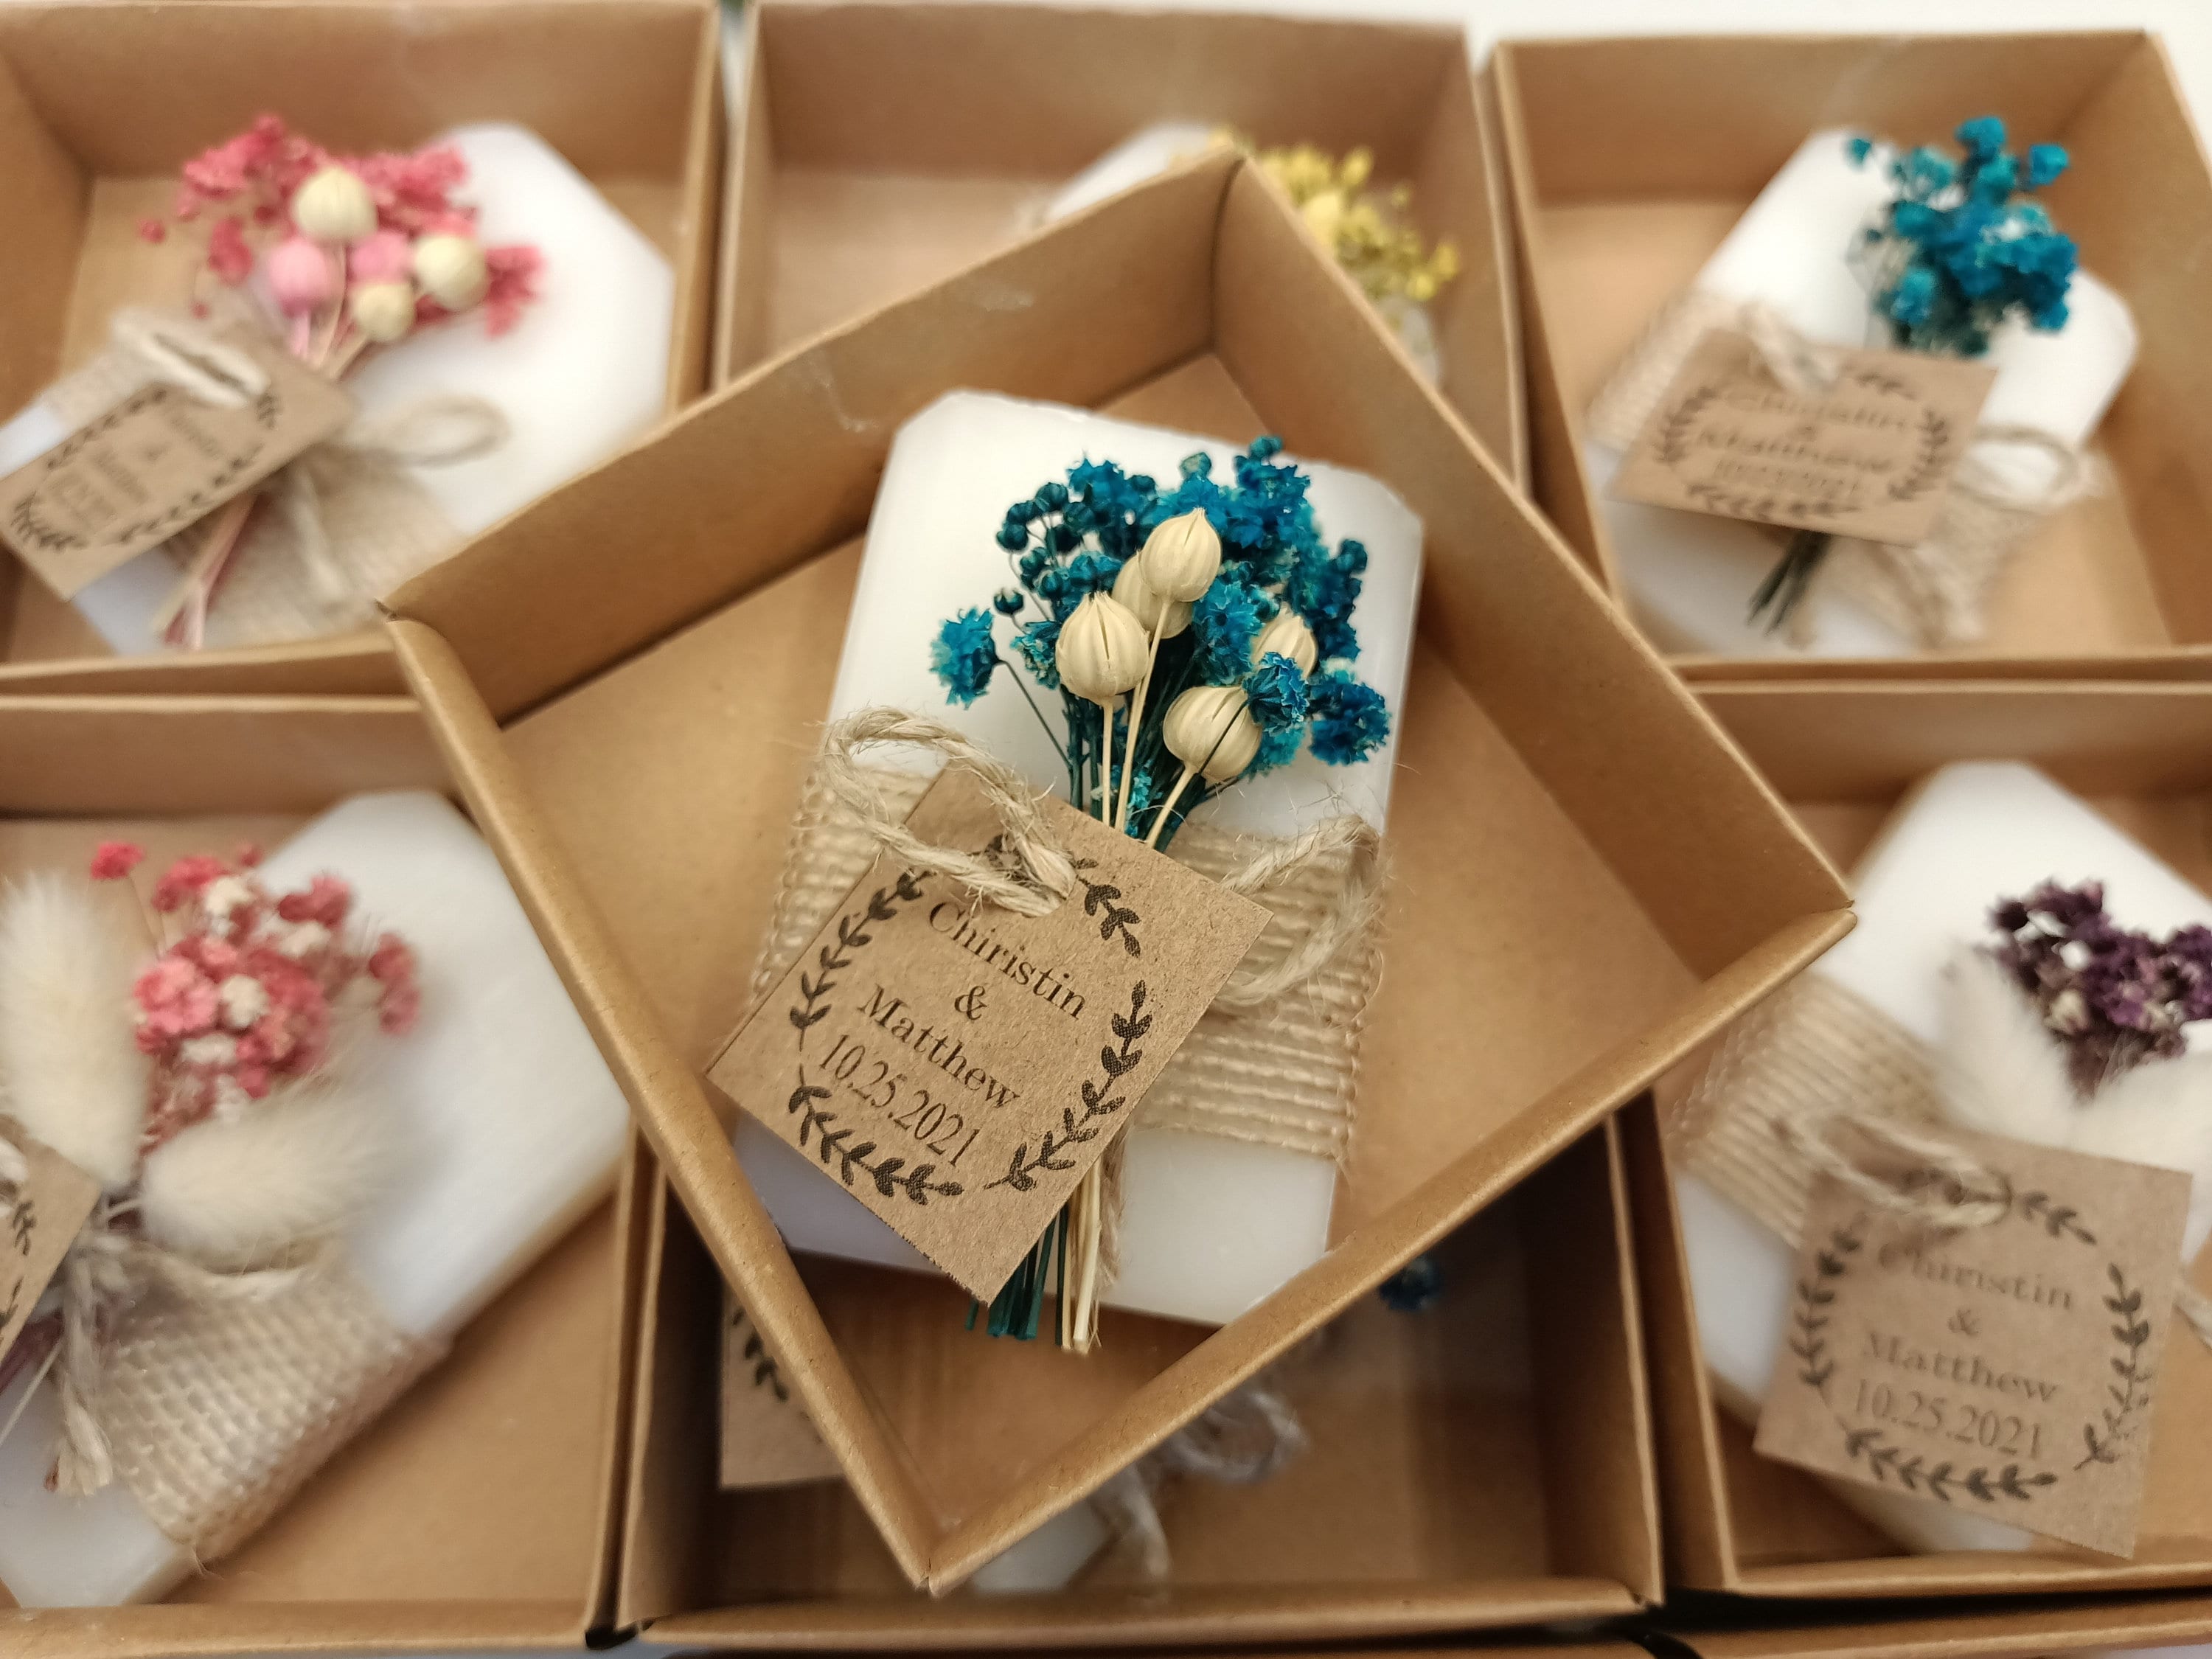 Bulk Baptism Gifts Bulk Candy Favors Flower Wedding magnet Wedding Candy Favors Rustic Favors Personalized Favor Boxes